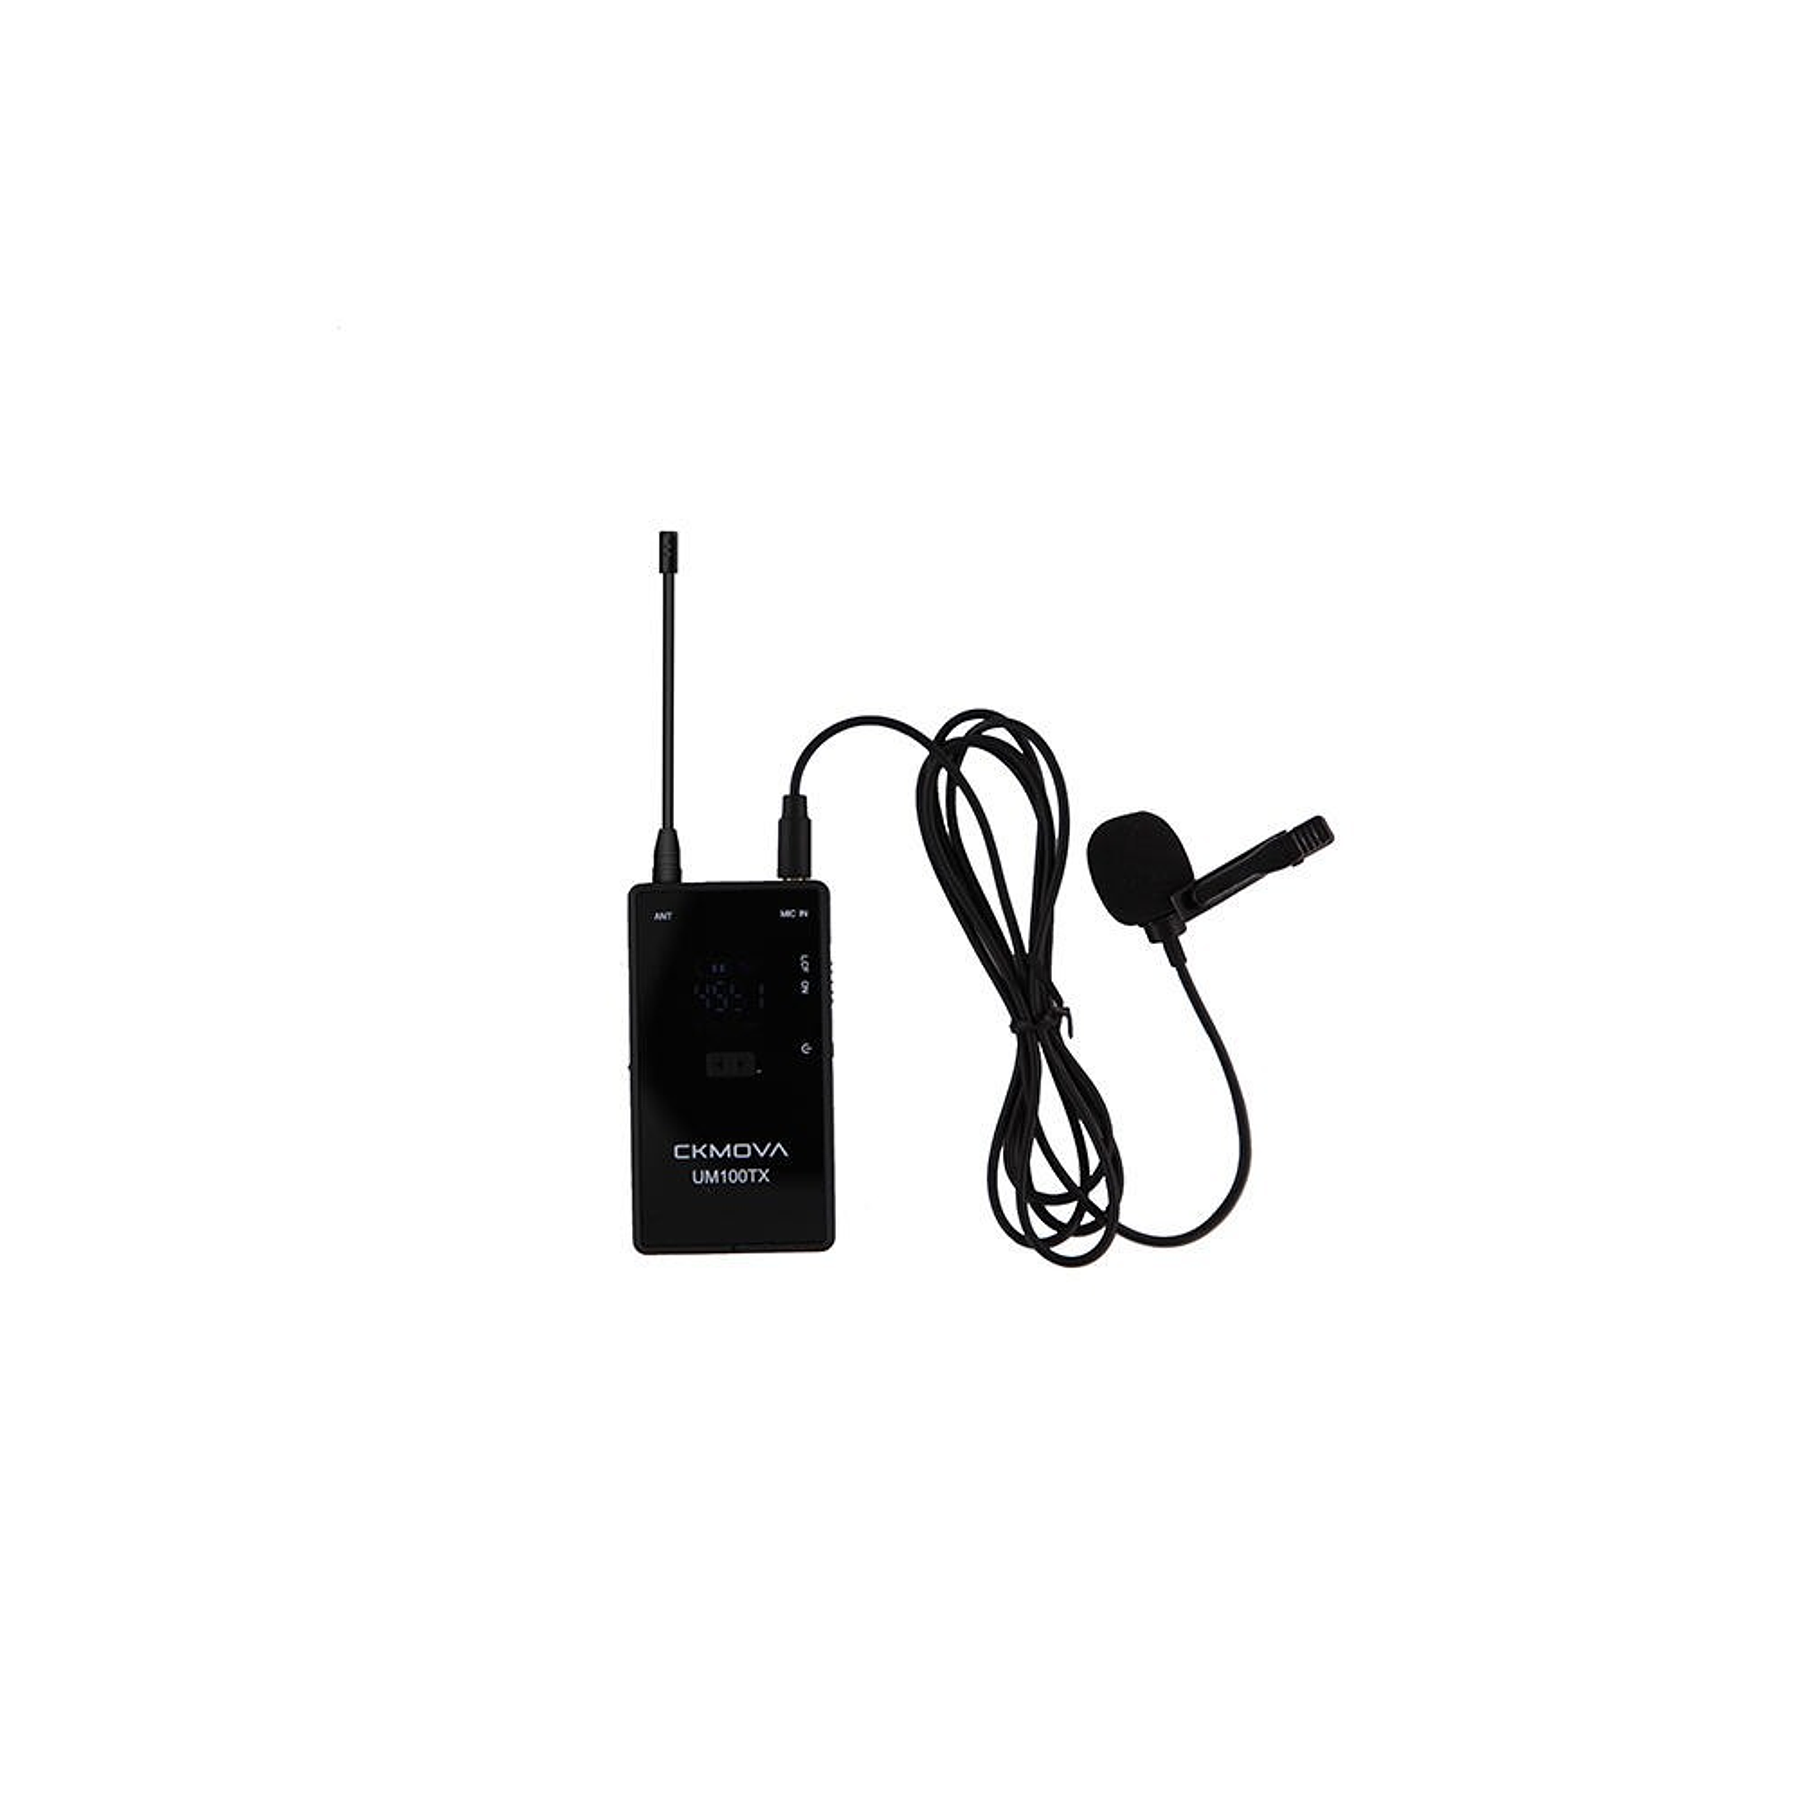 Microfono Ckmova Lavalier Omni Inalambrico UHF Kit Ultracompacto Transmisor y Receptor